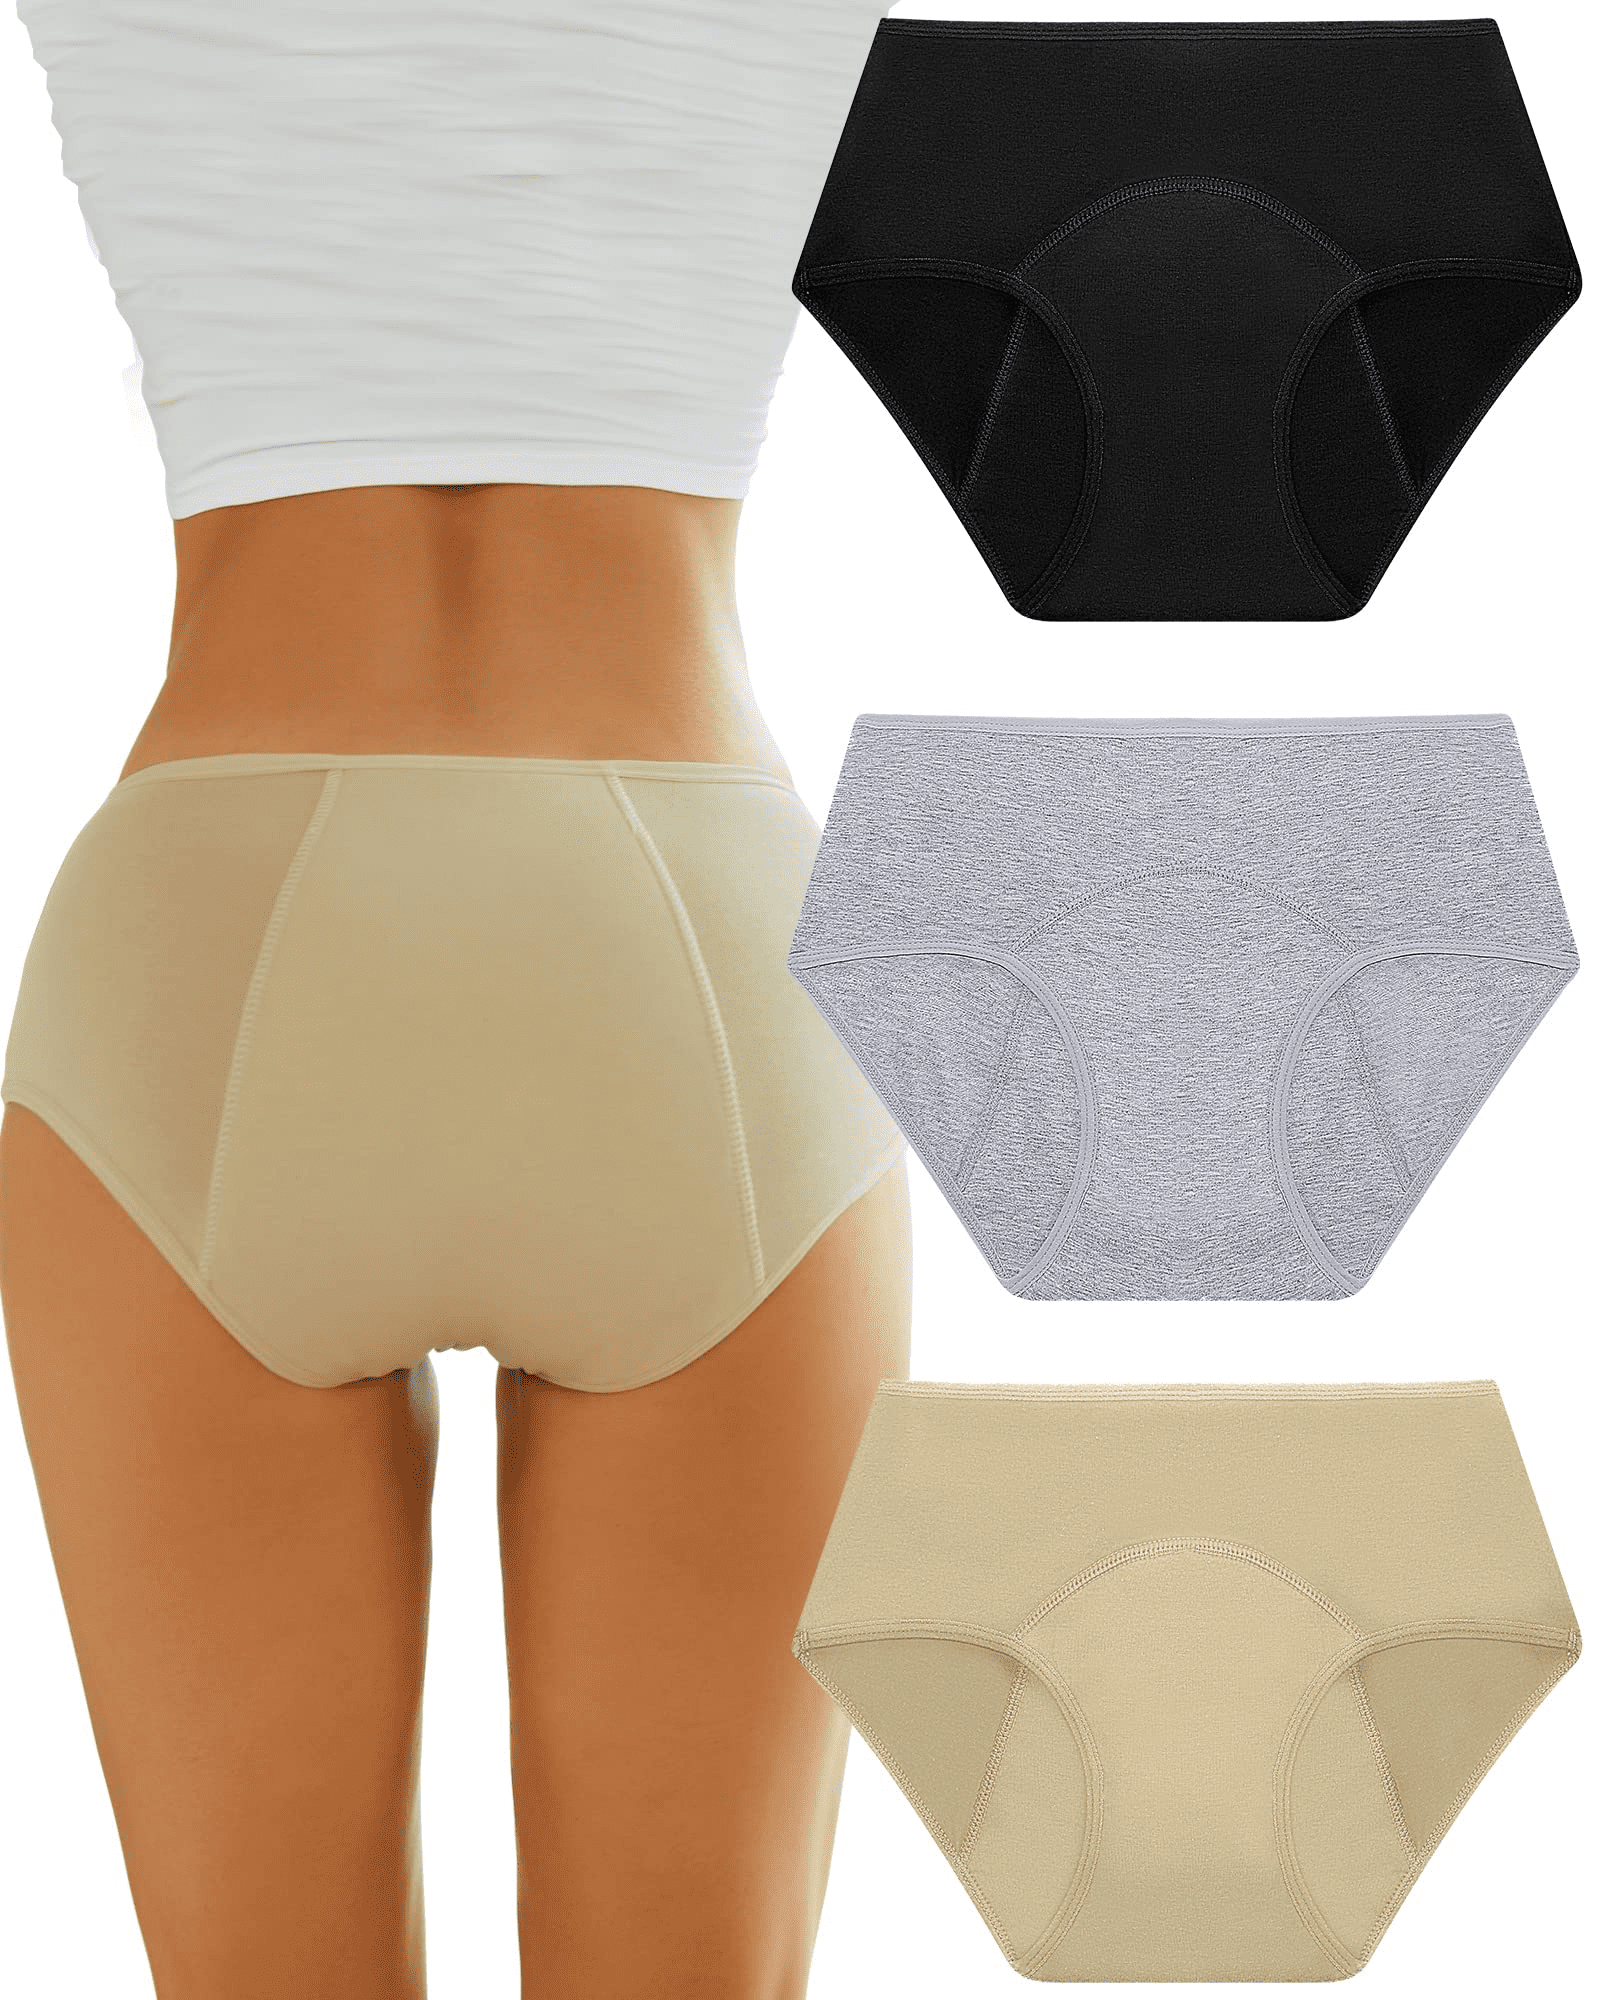 FINETOO 3 Pack Period Underwear for Women Cotton Leakproof Unides